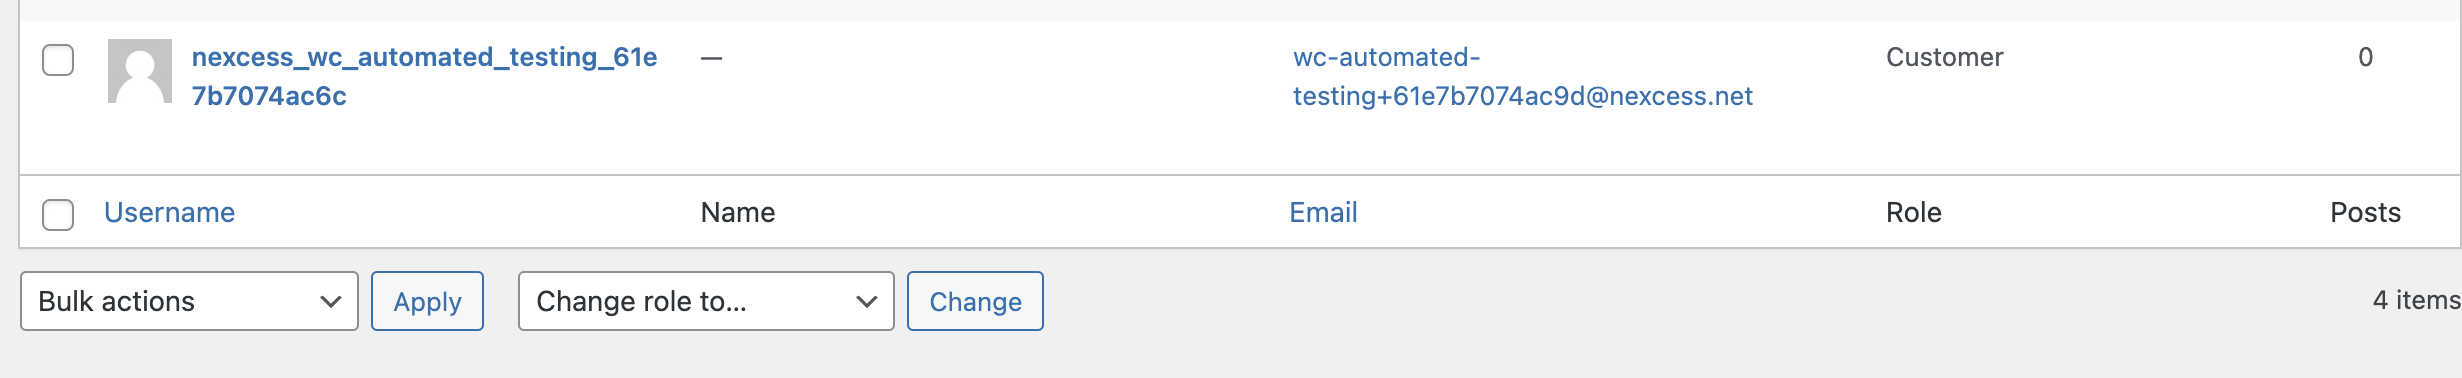 WooCommerce Automated Testing User